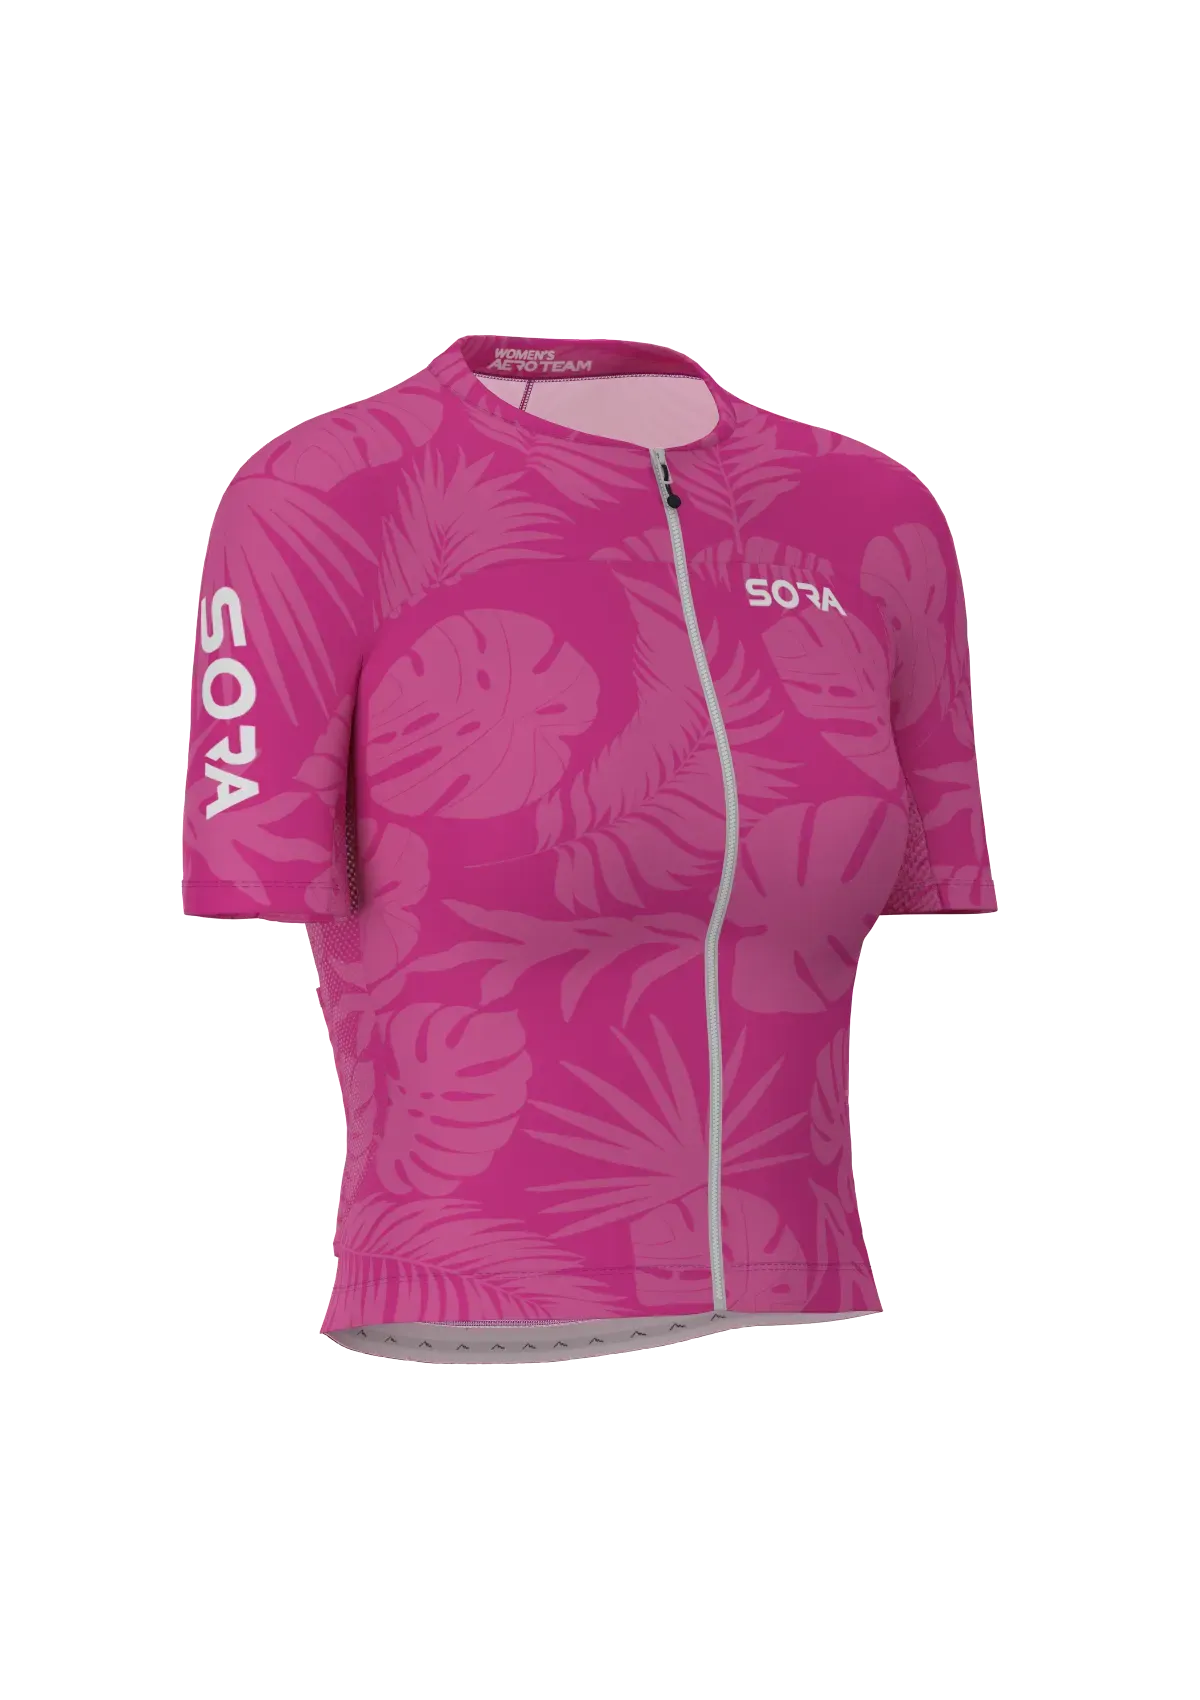 Pink Aero Team Women's Cycling Jersey